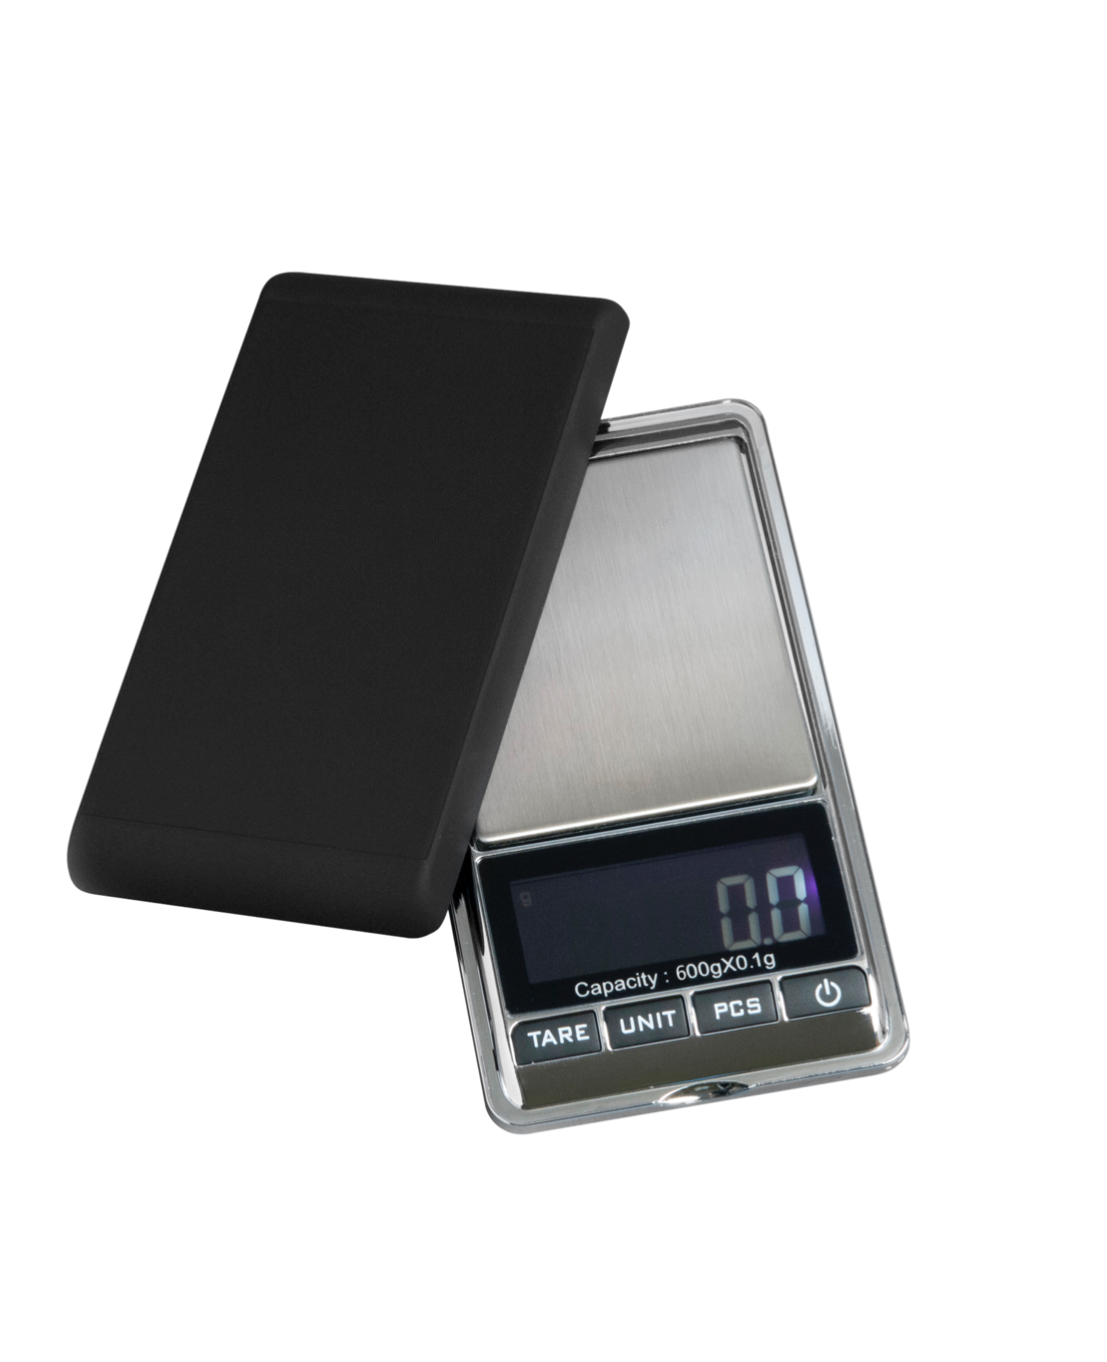 Superior Balance Viper-100 Professional Digital Pocket Scale 100g x 0.01g  (MSRP $13.99)